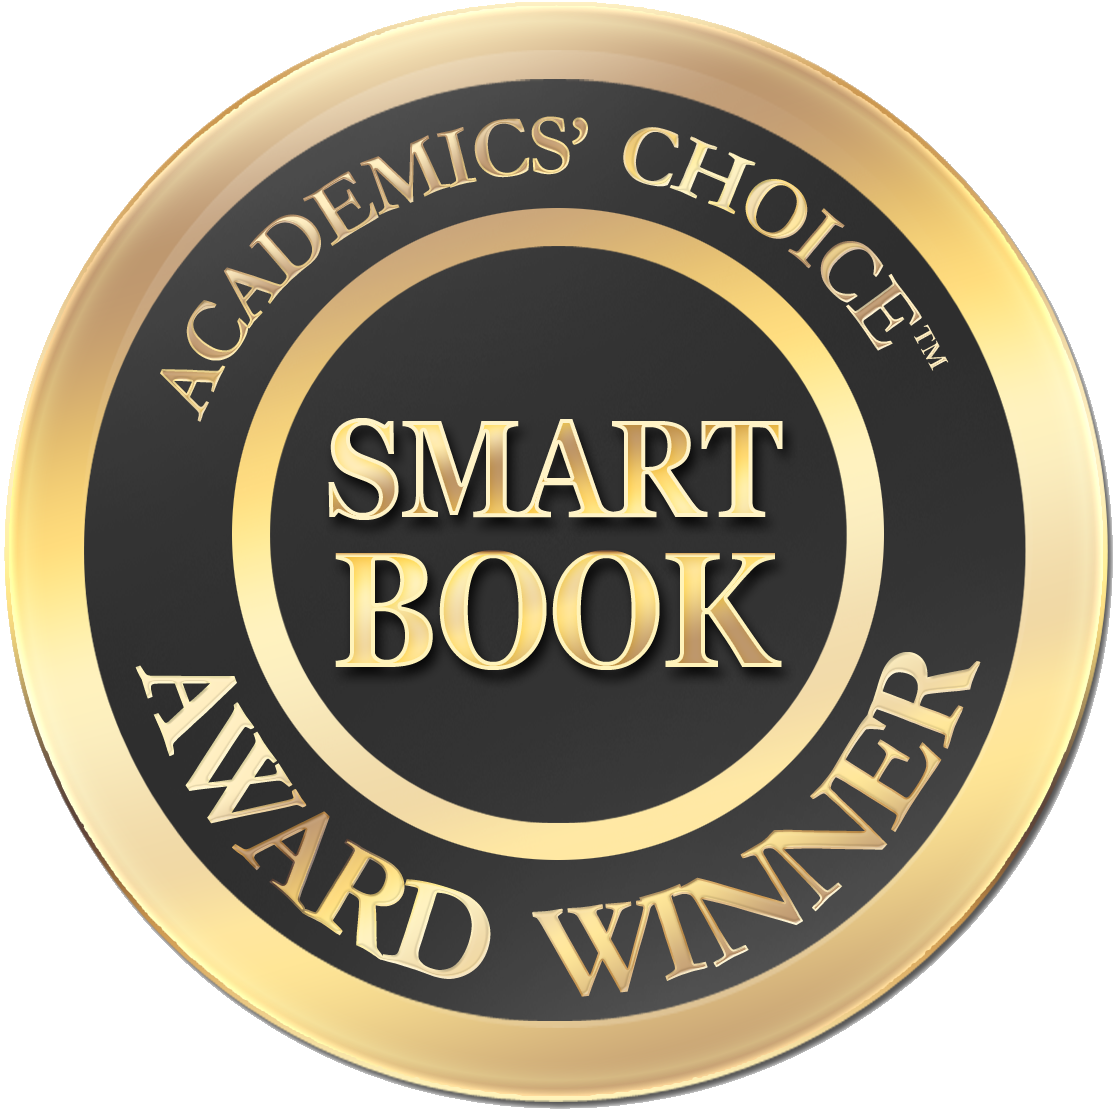 Academics' Choice Awards Smart Book Winner